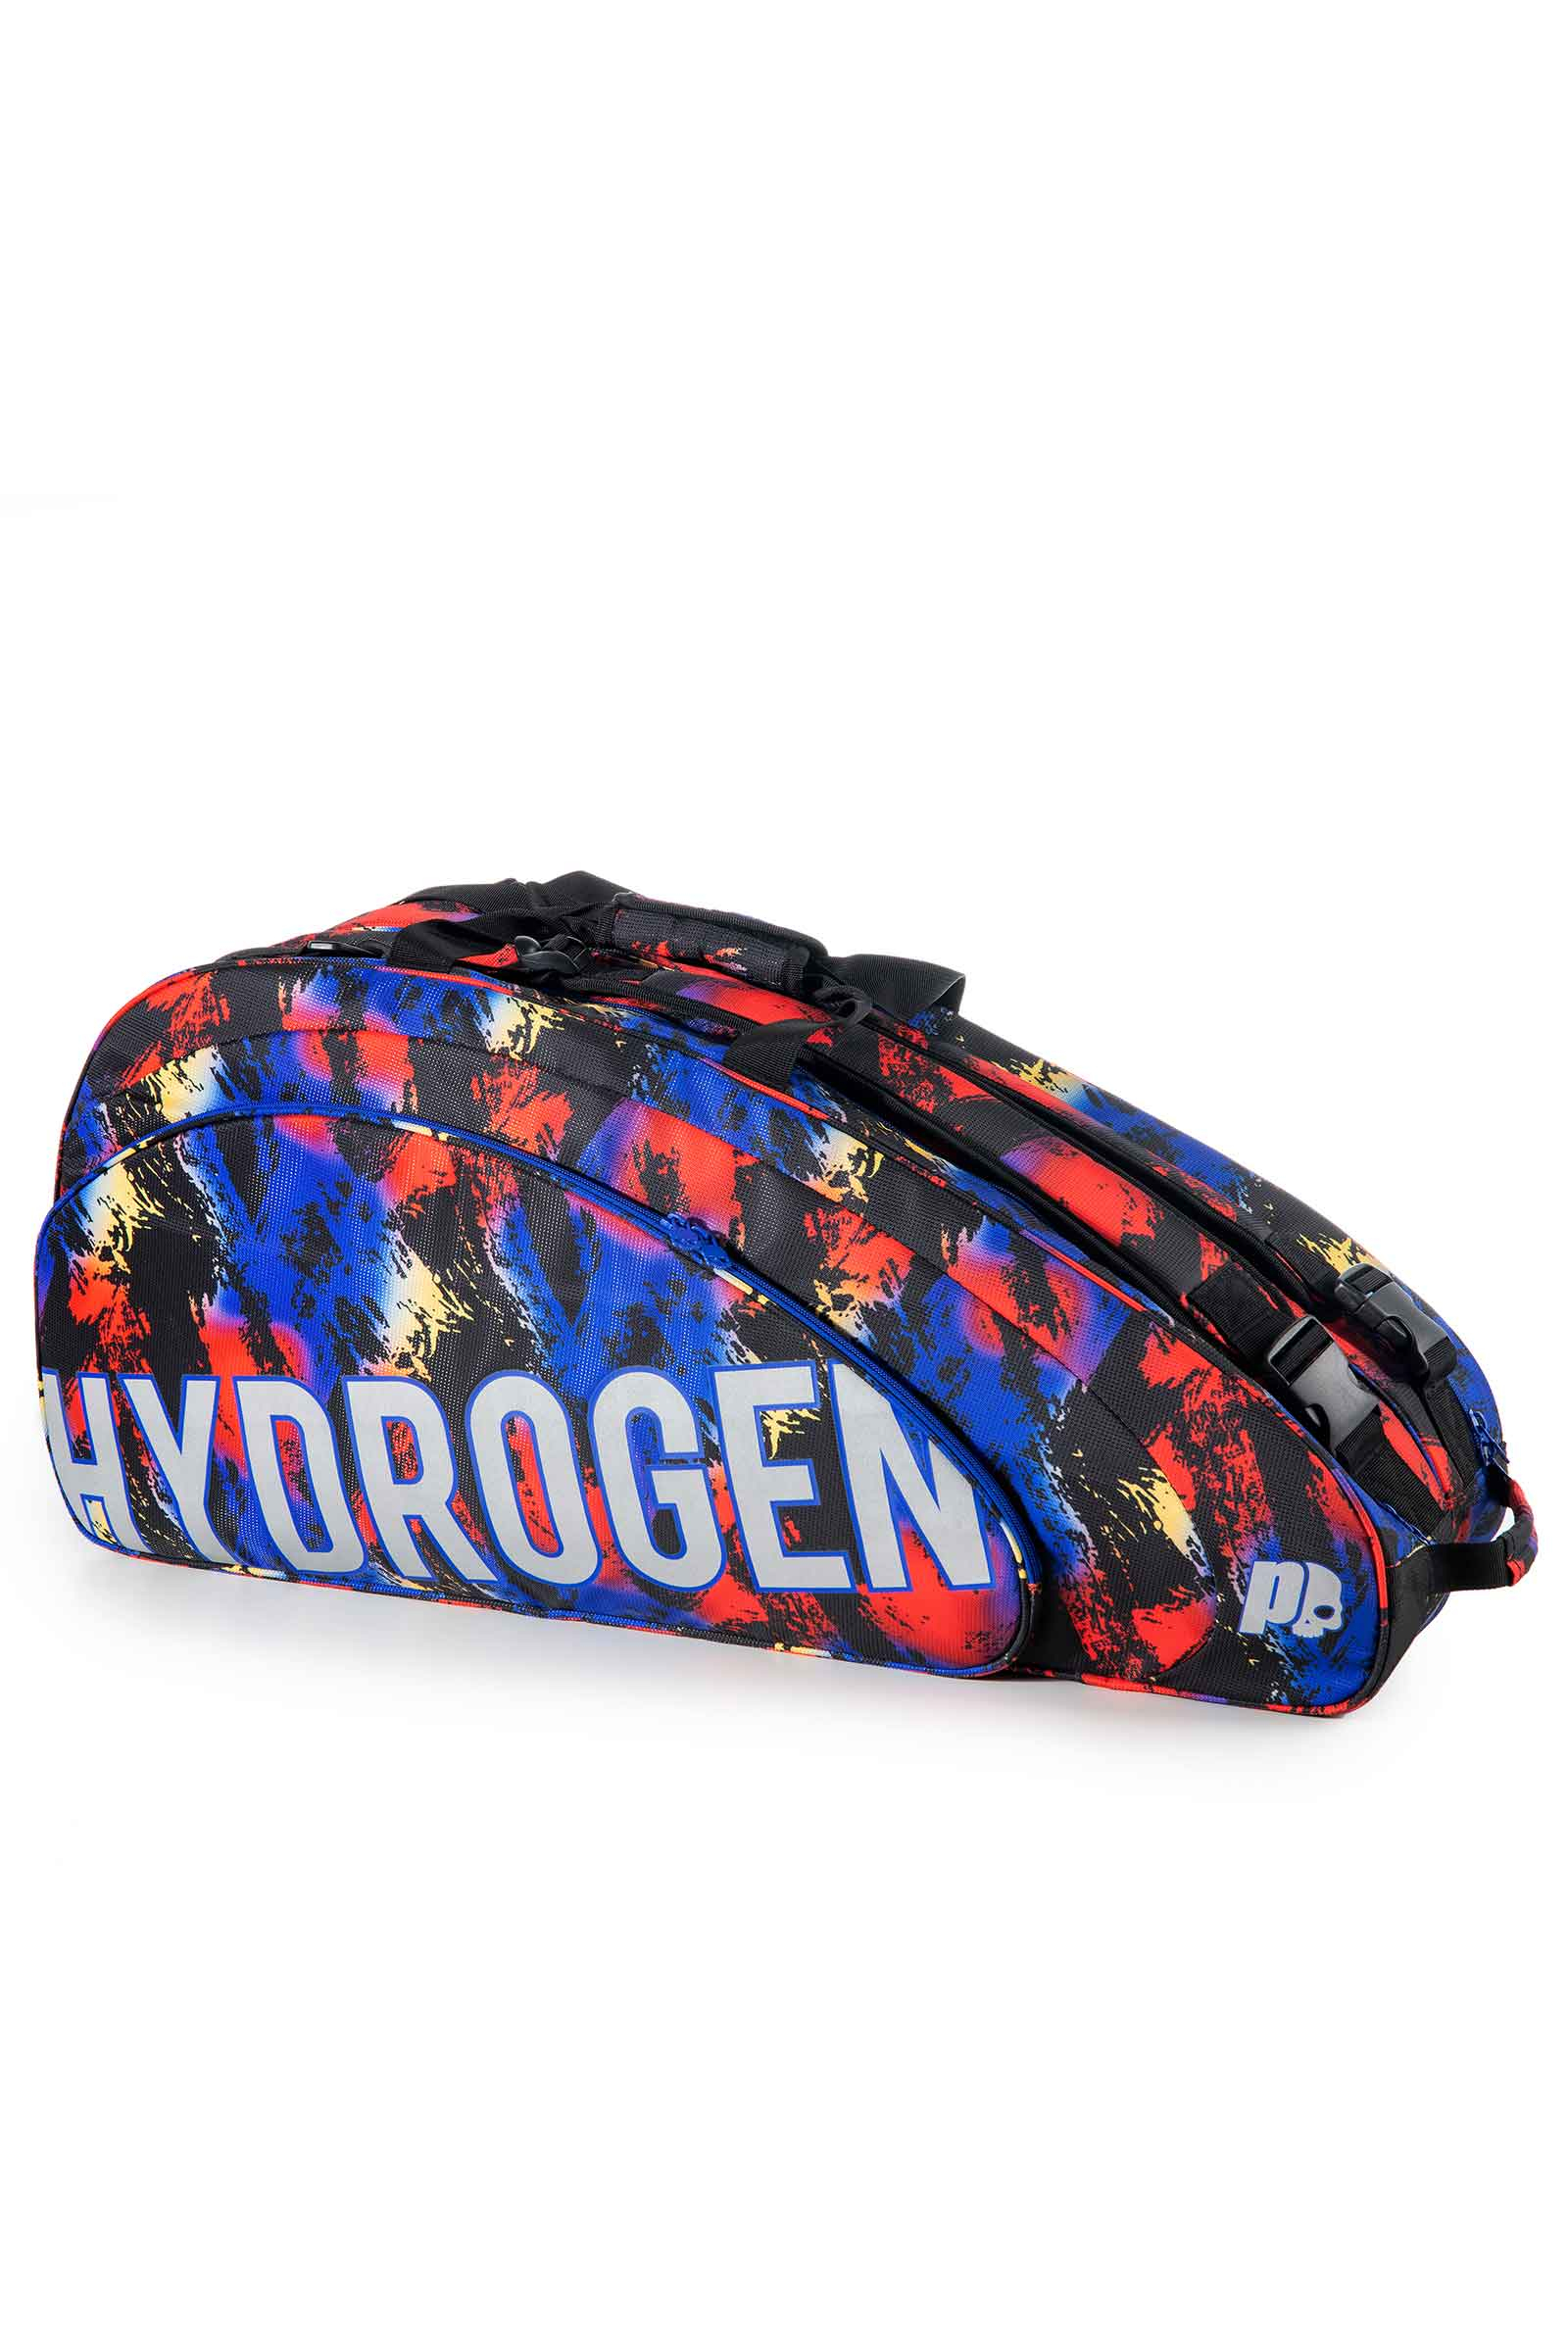 RANDOM  9 RACKETS BAG PRINCE BY HYDROGEN - Accessori - Abbigliamento sportivo | Hydrogen